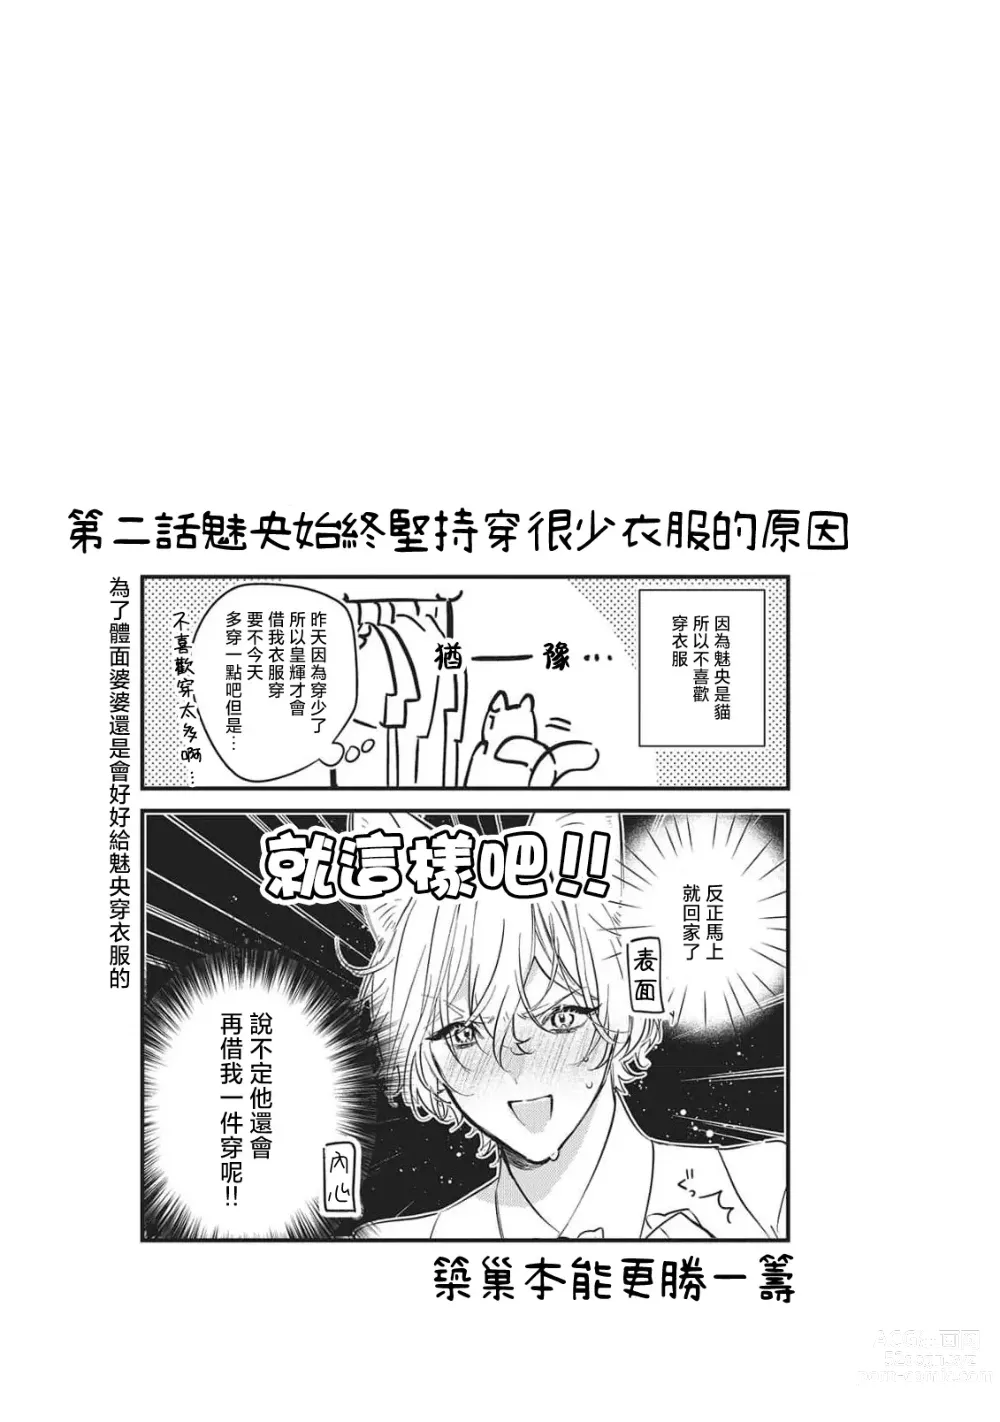 Page 3 of manga 无可奈何花落去 只叹道，命运使然 番外